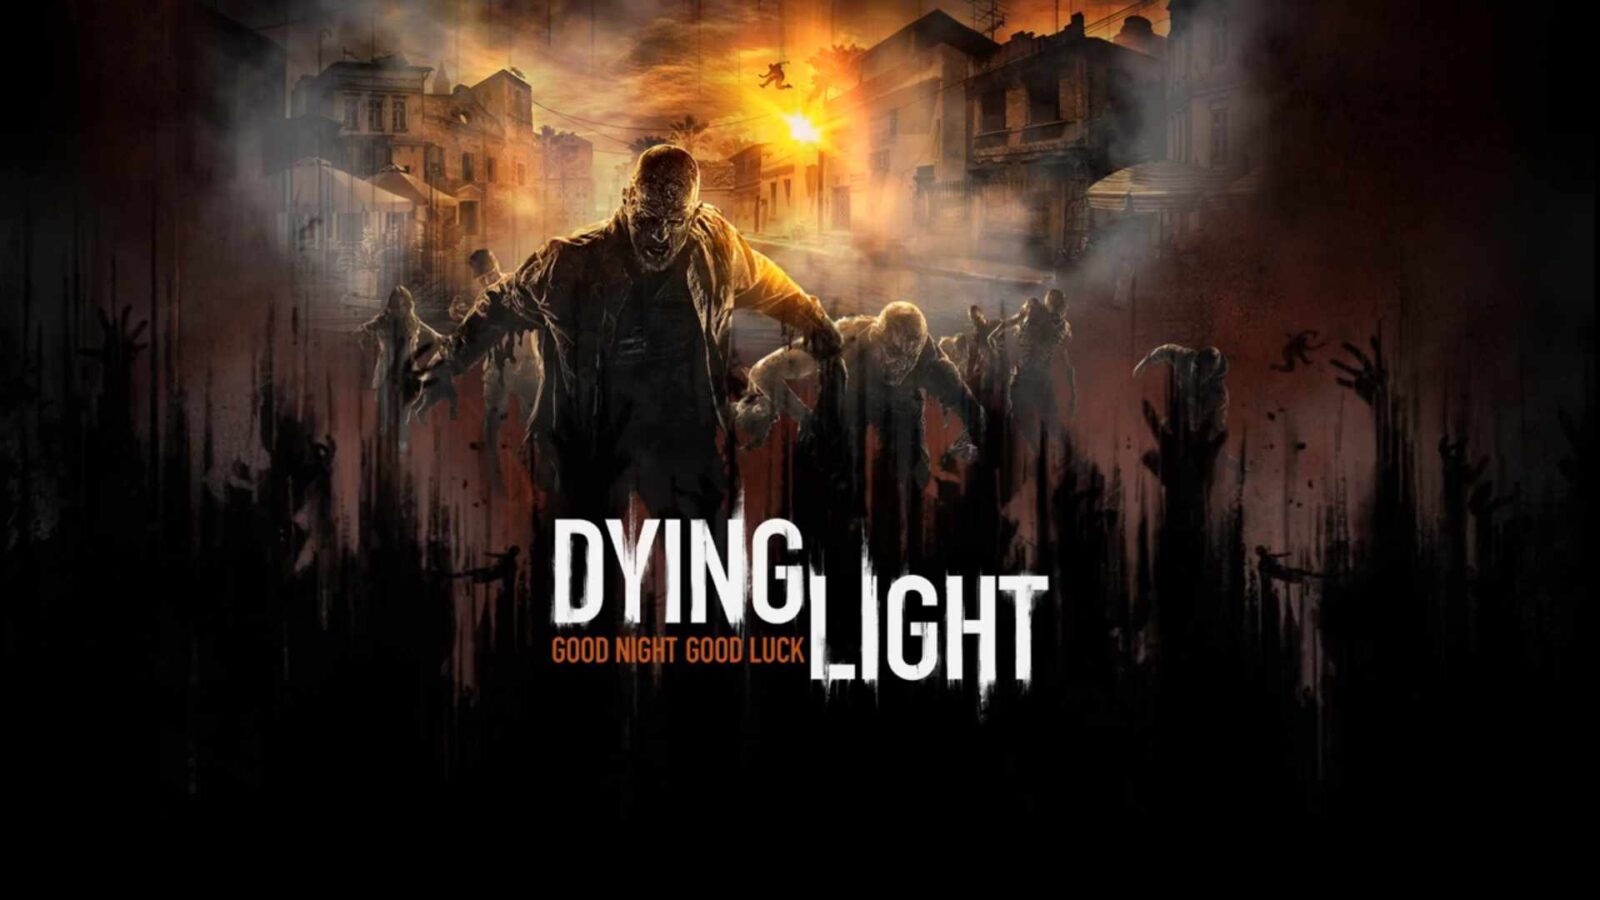 Dying Light Survival Horror Game - Free Live Wallpaper